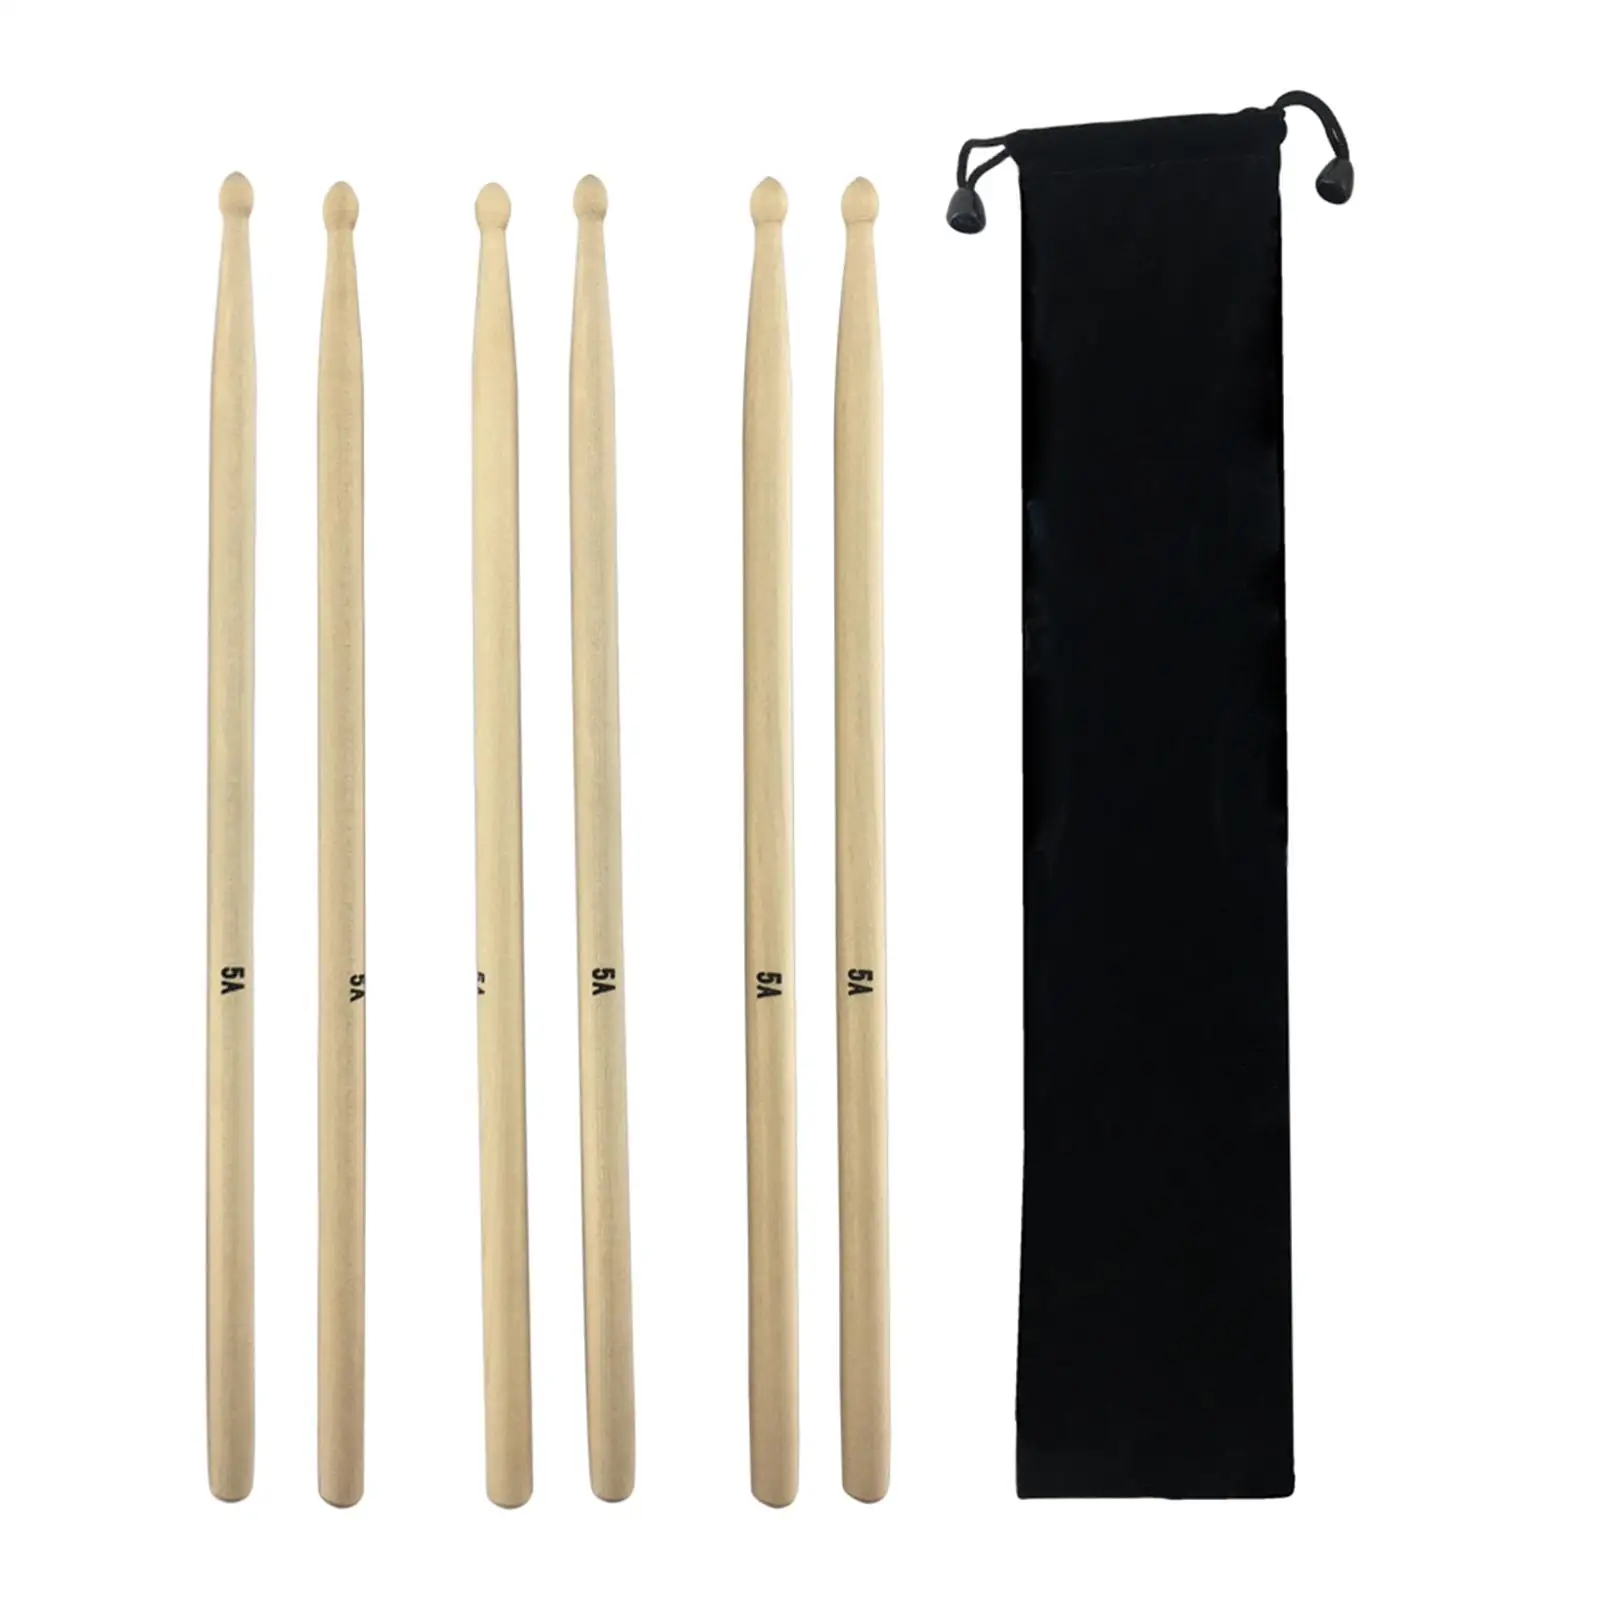 6x Percussion Mallets Sticks 16 inch Long Glockenspiel Sticks for Kids Drummers